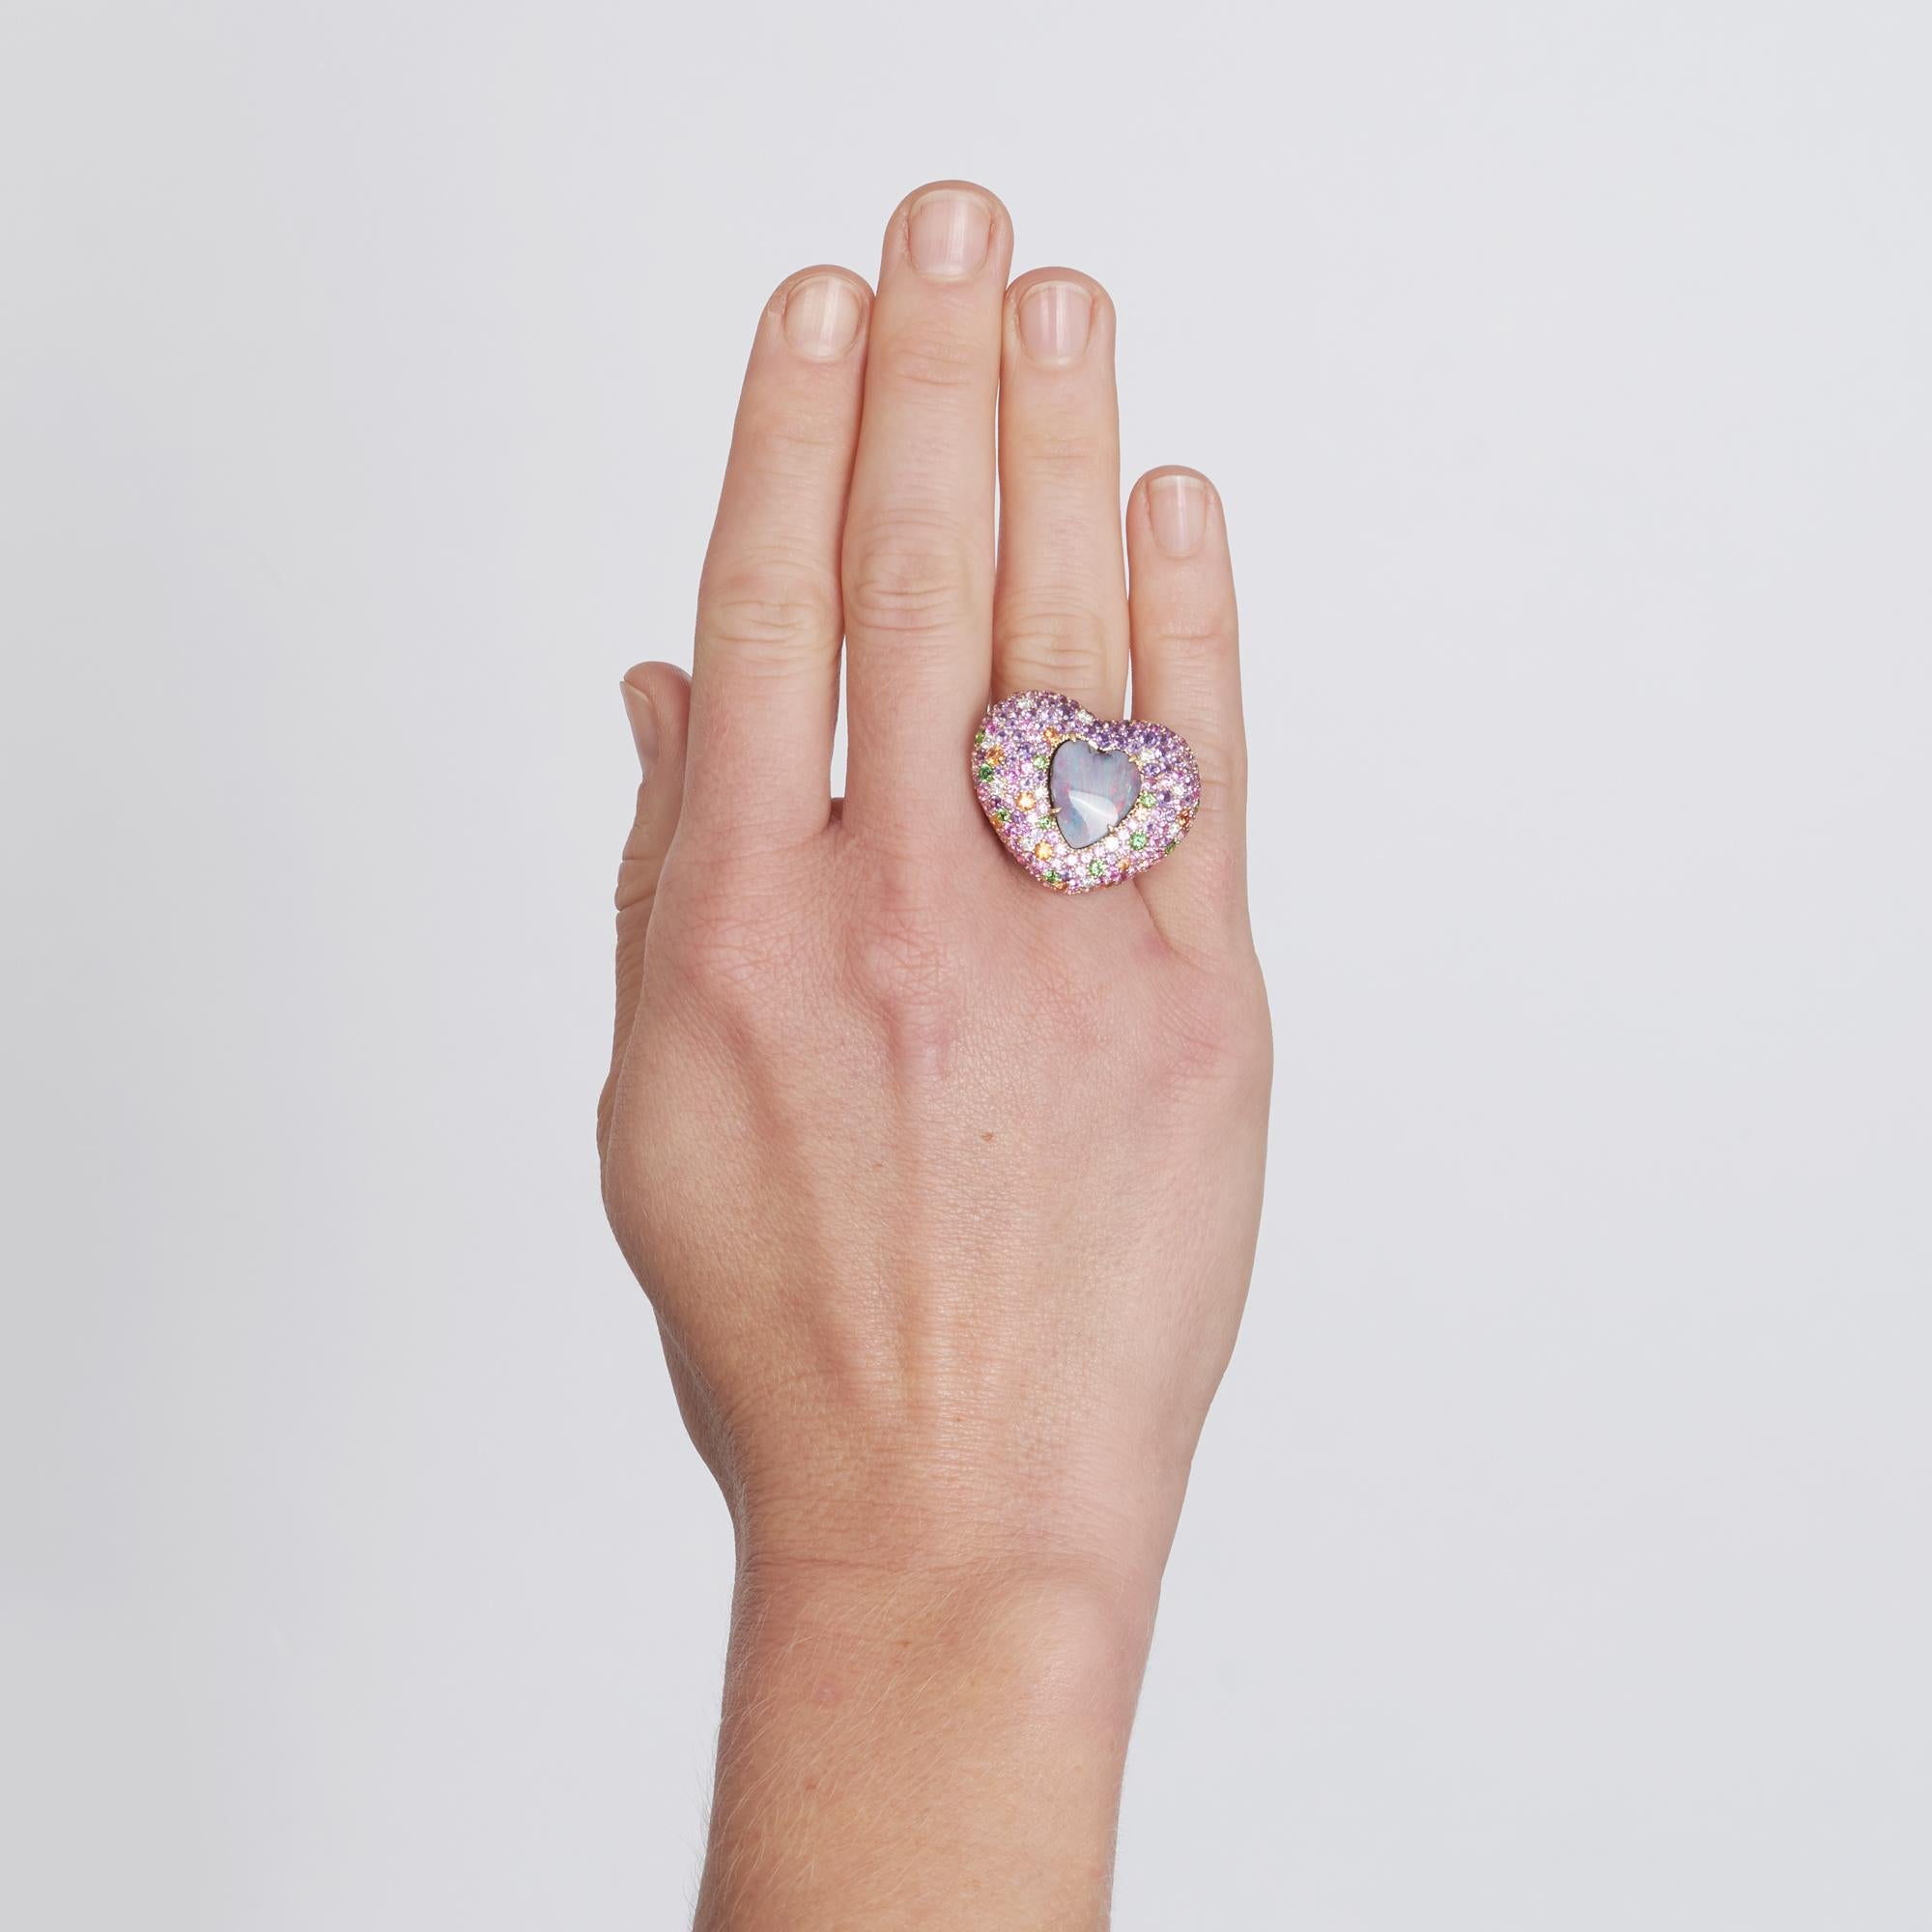 Heart Cut Margot McKinney 18 Karat Gold Ring with Opal, Diamond, Amethyst and Sapphire